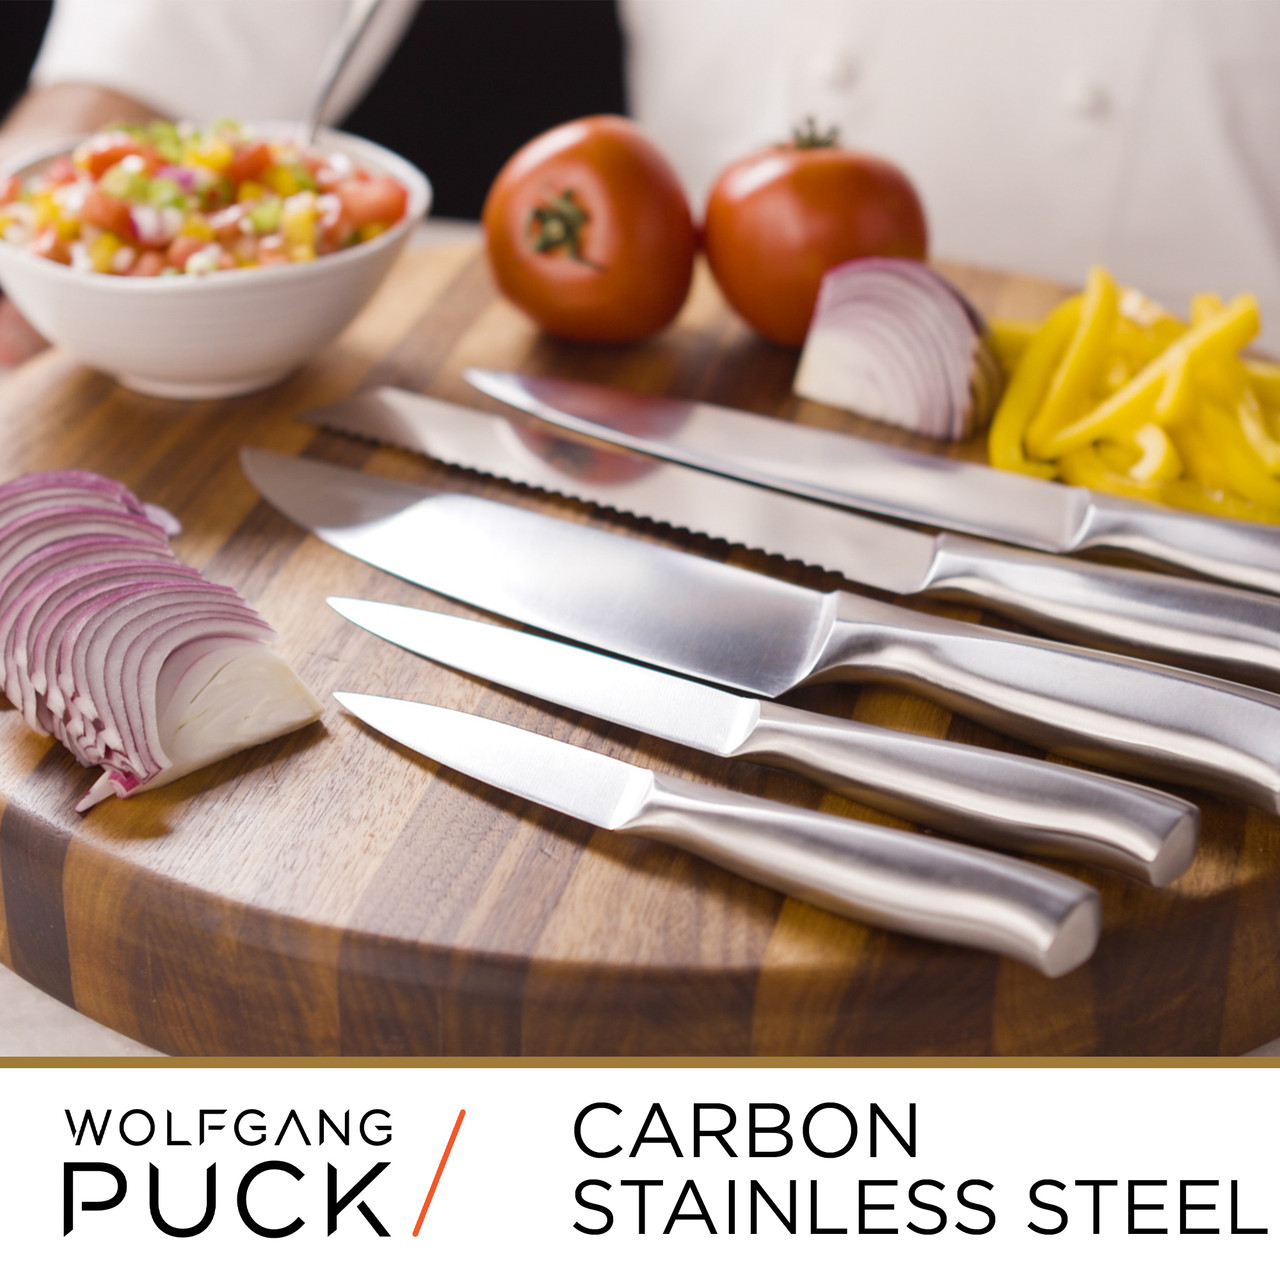 Knife Set, 6 Piece Kitchen Knives Set with Block Wooden, Stainless Steel  Knife Block Set, Chef Knife Set for Kitchen